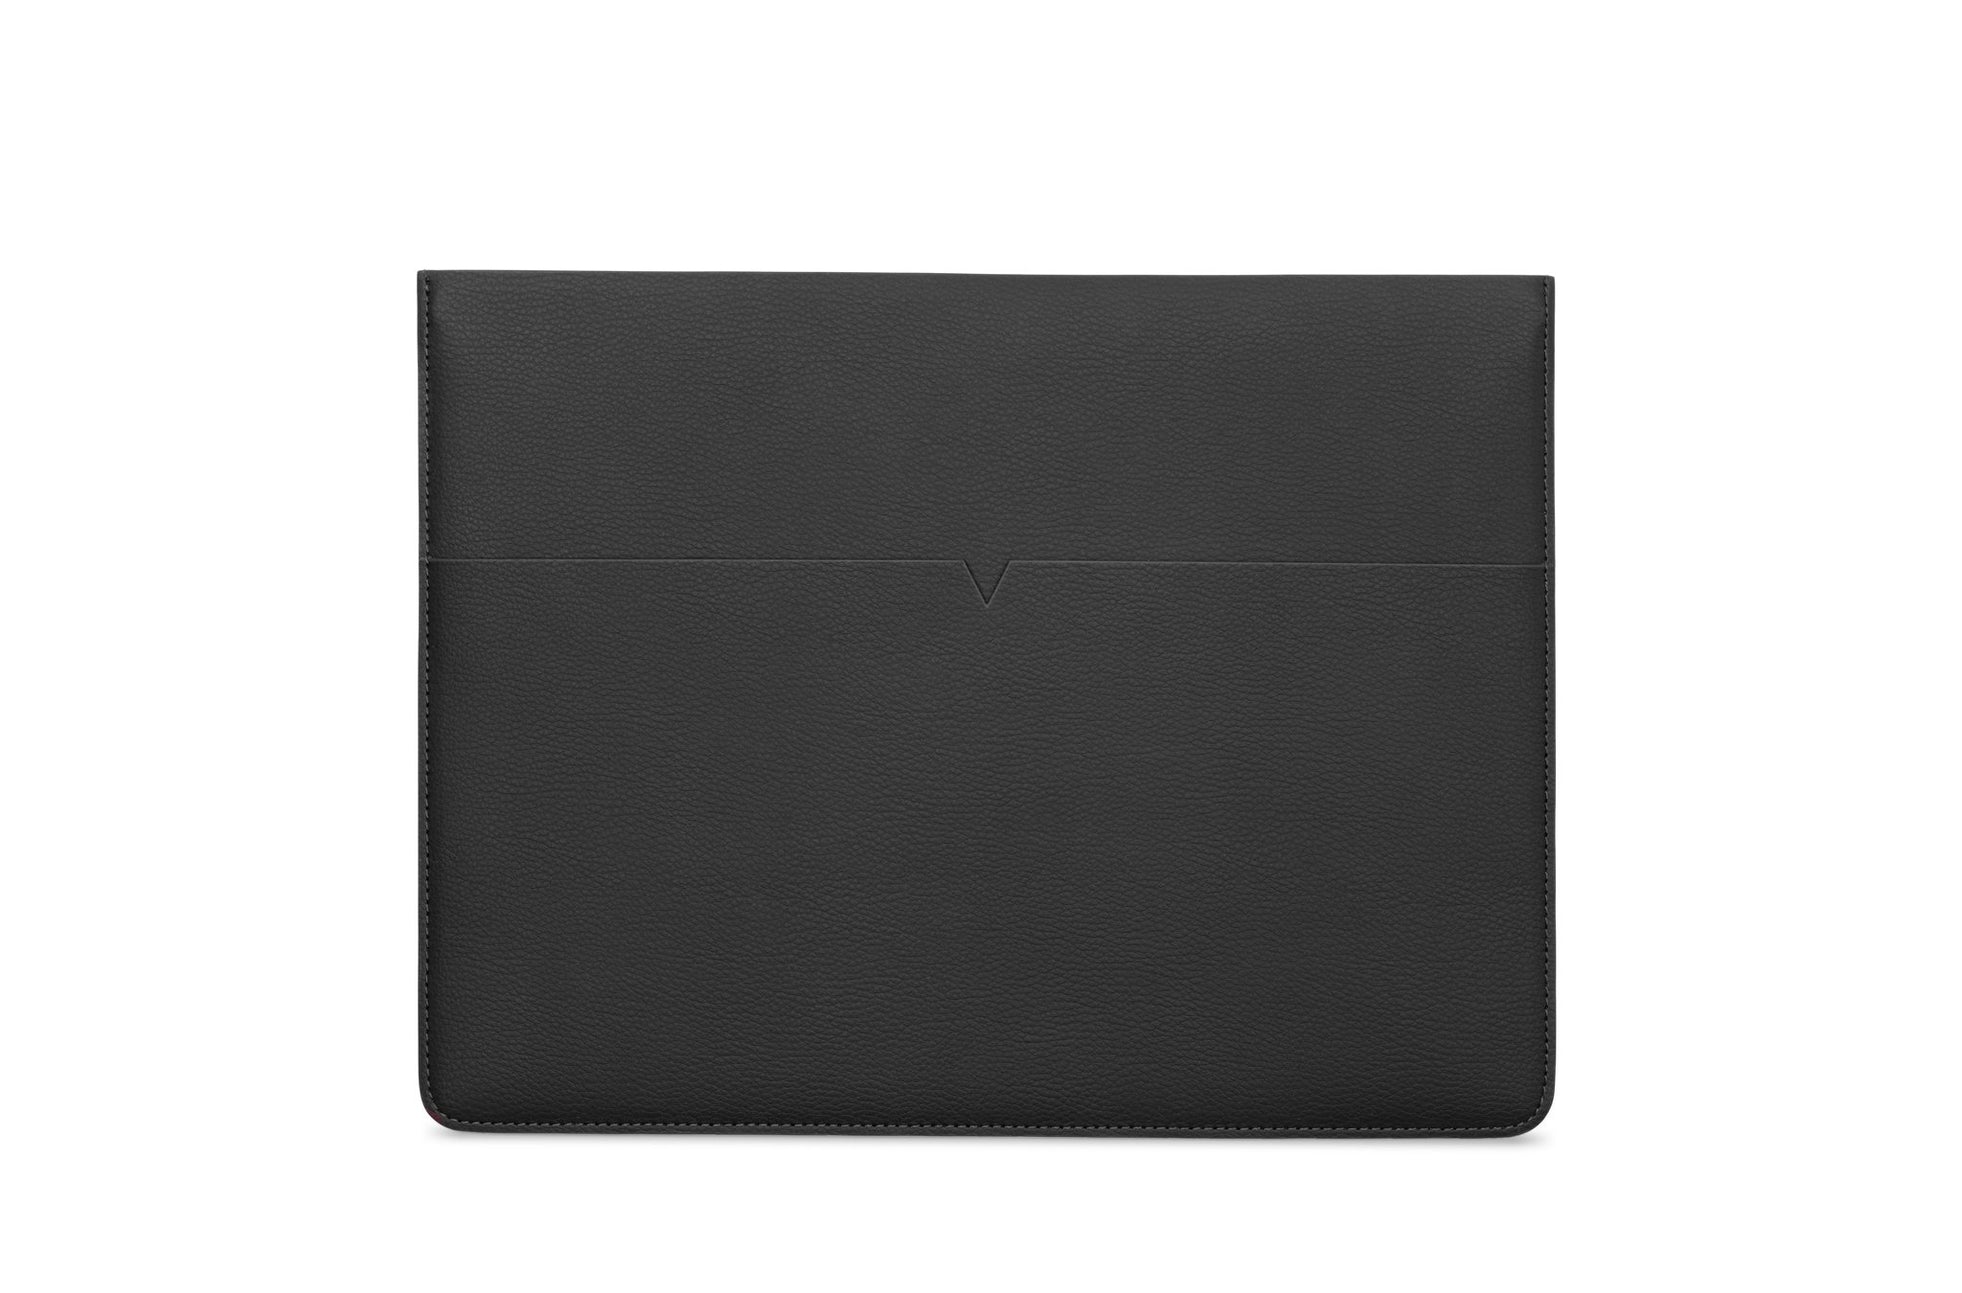 The MacBook Sleeve 13-inch - Sample Sale in Technik-Leather in Black image 1